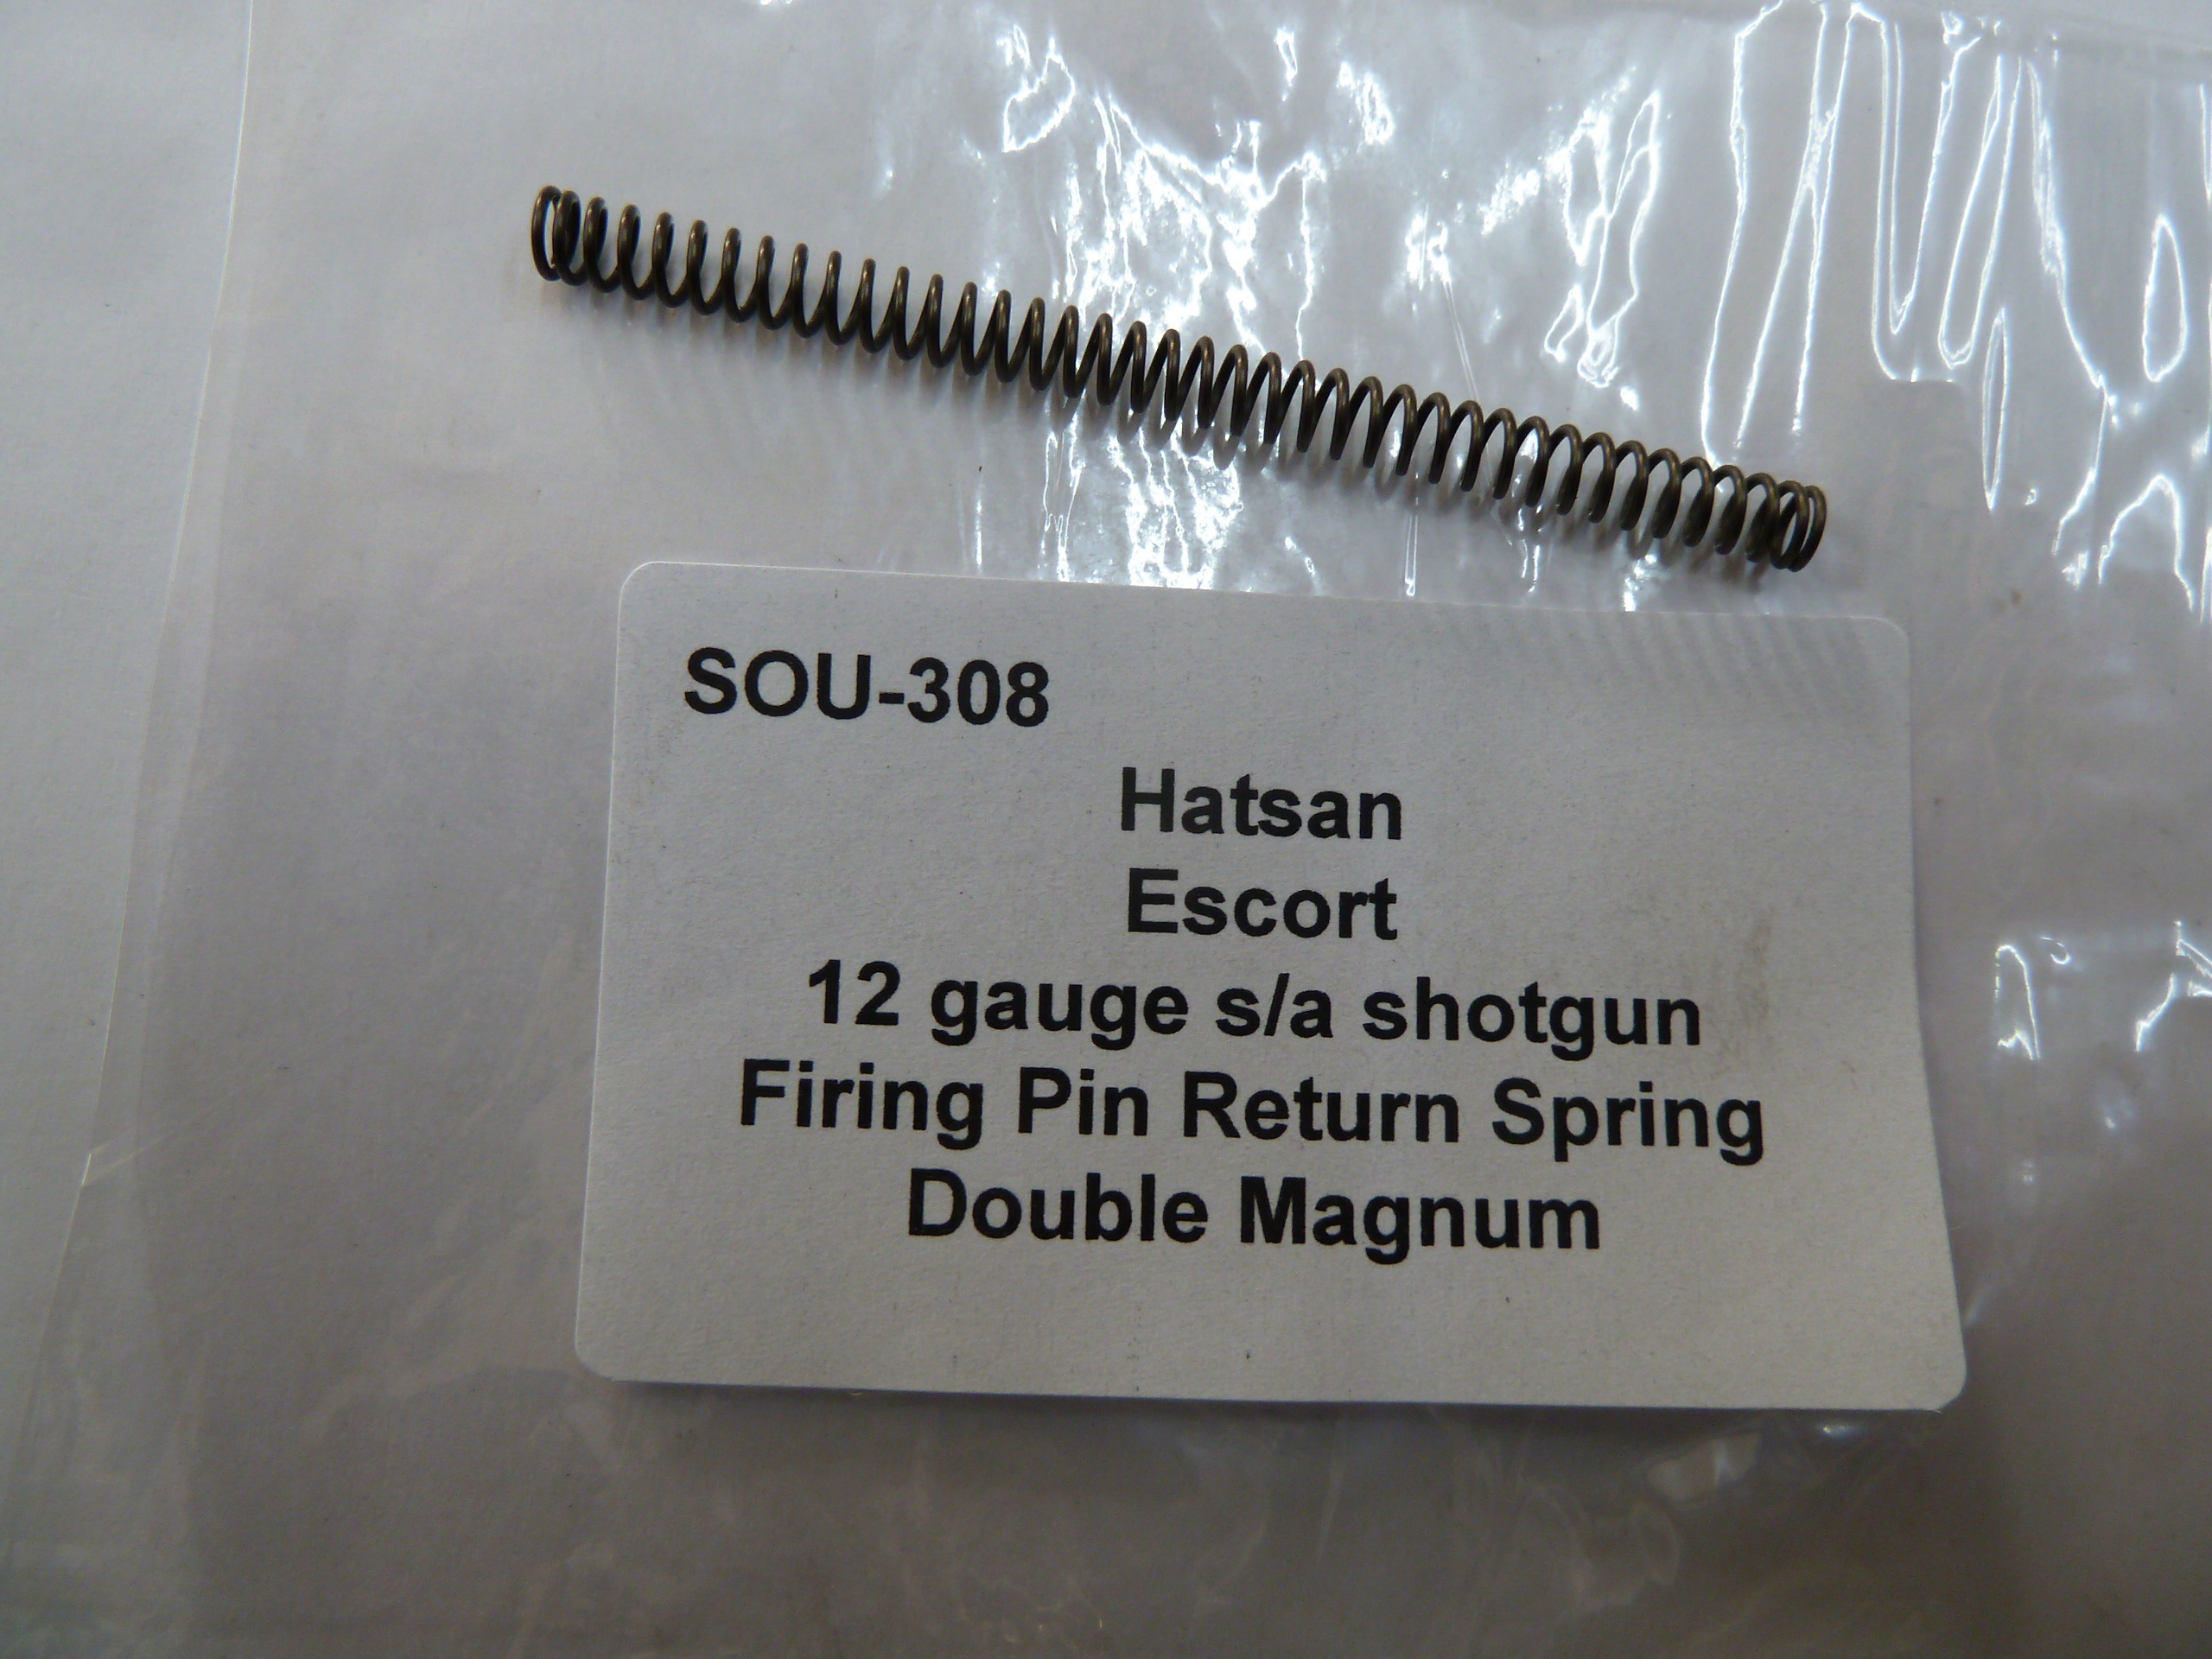 Hatsan Escort firing pin return spring